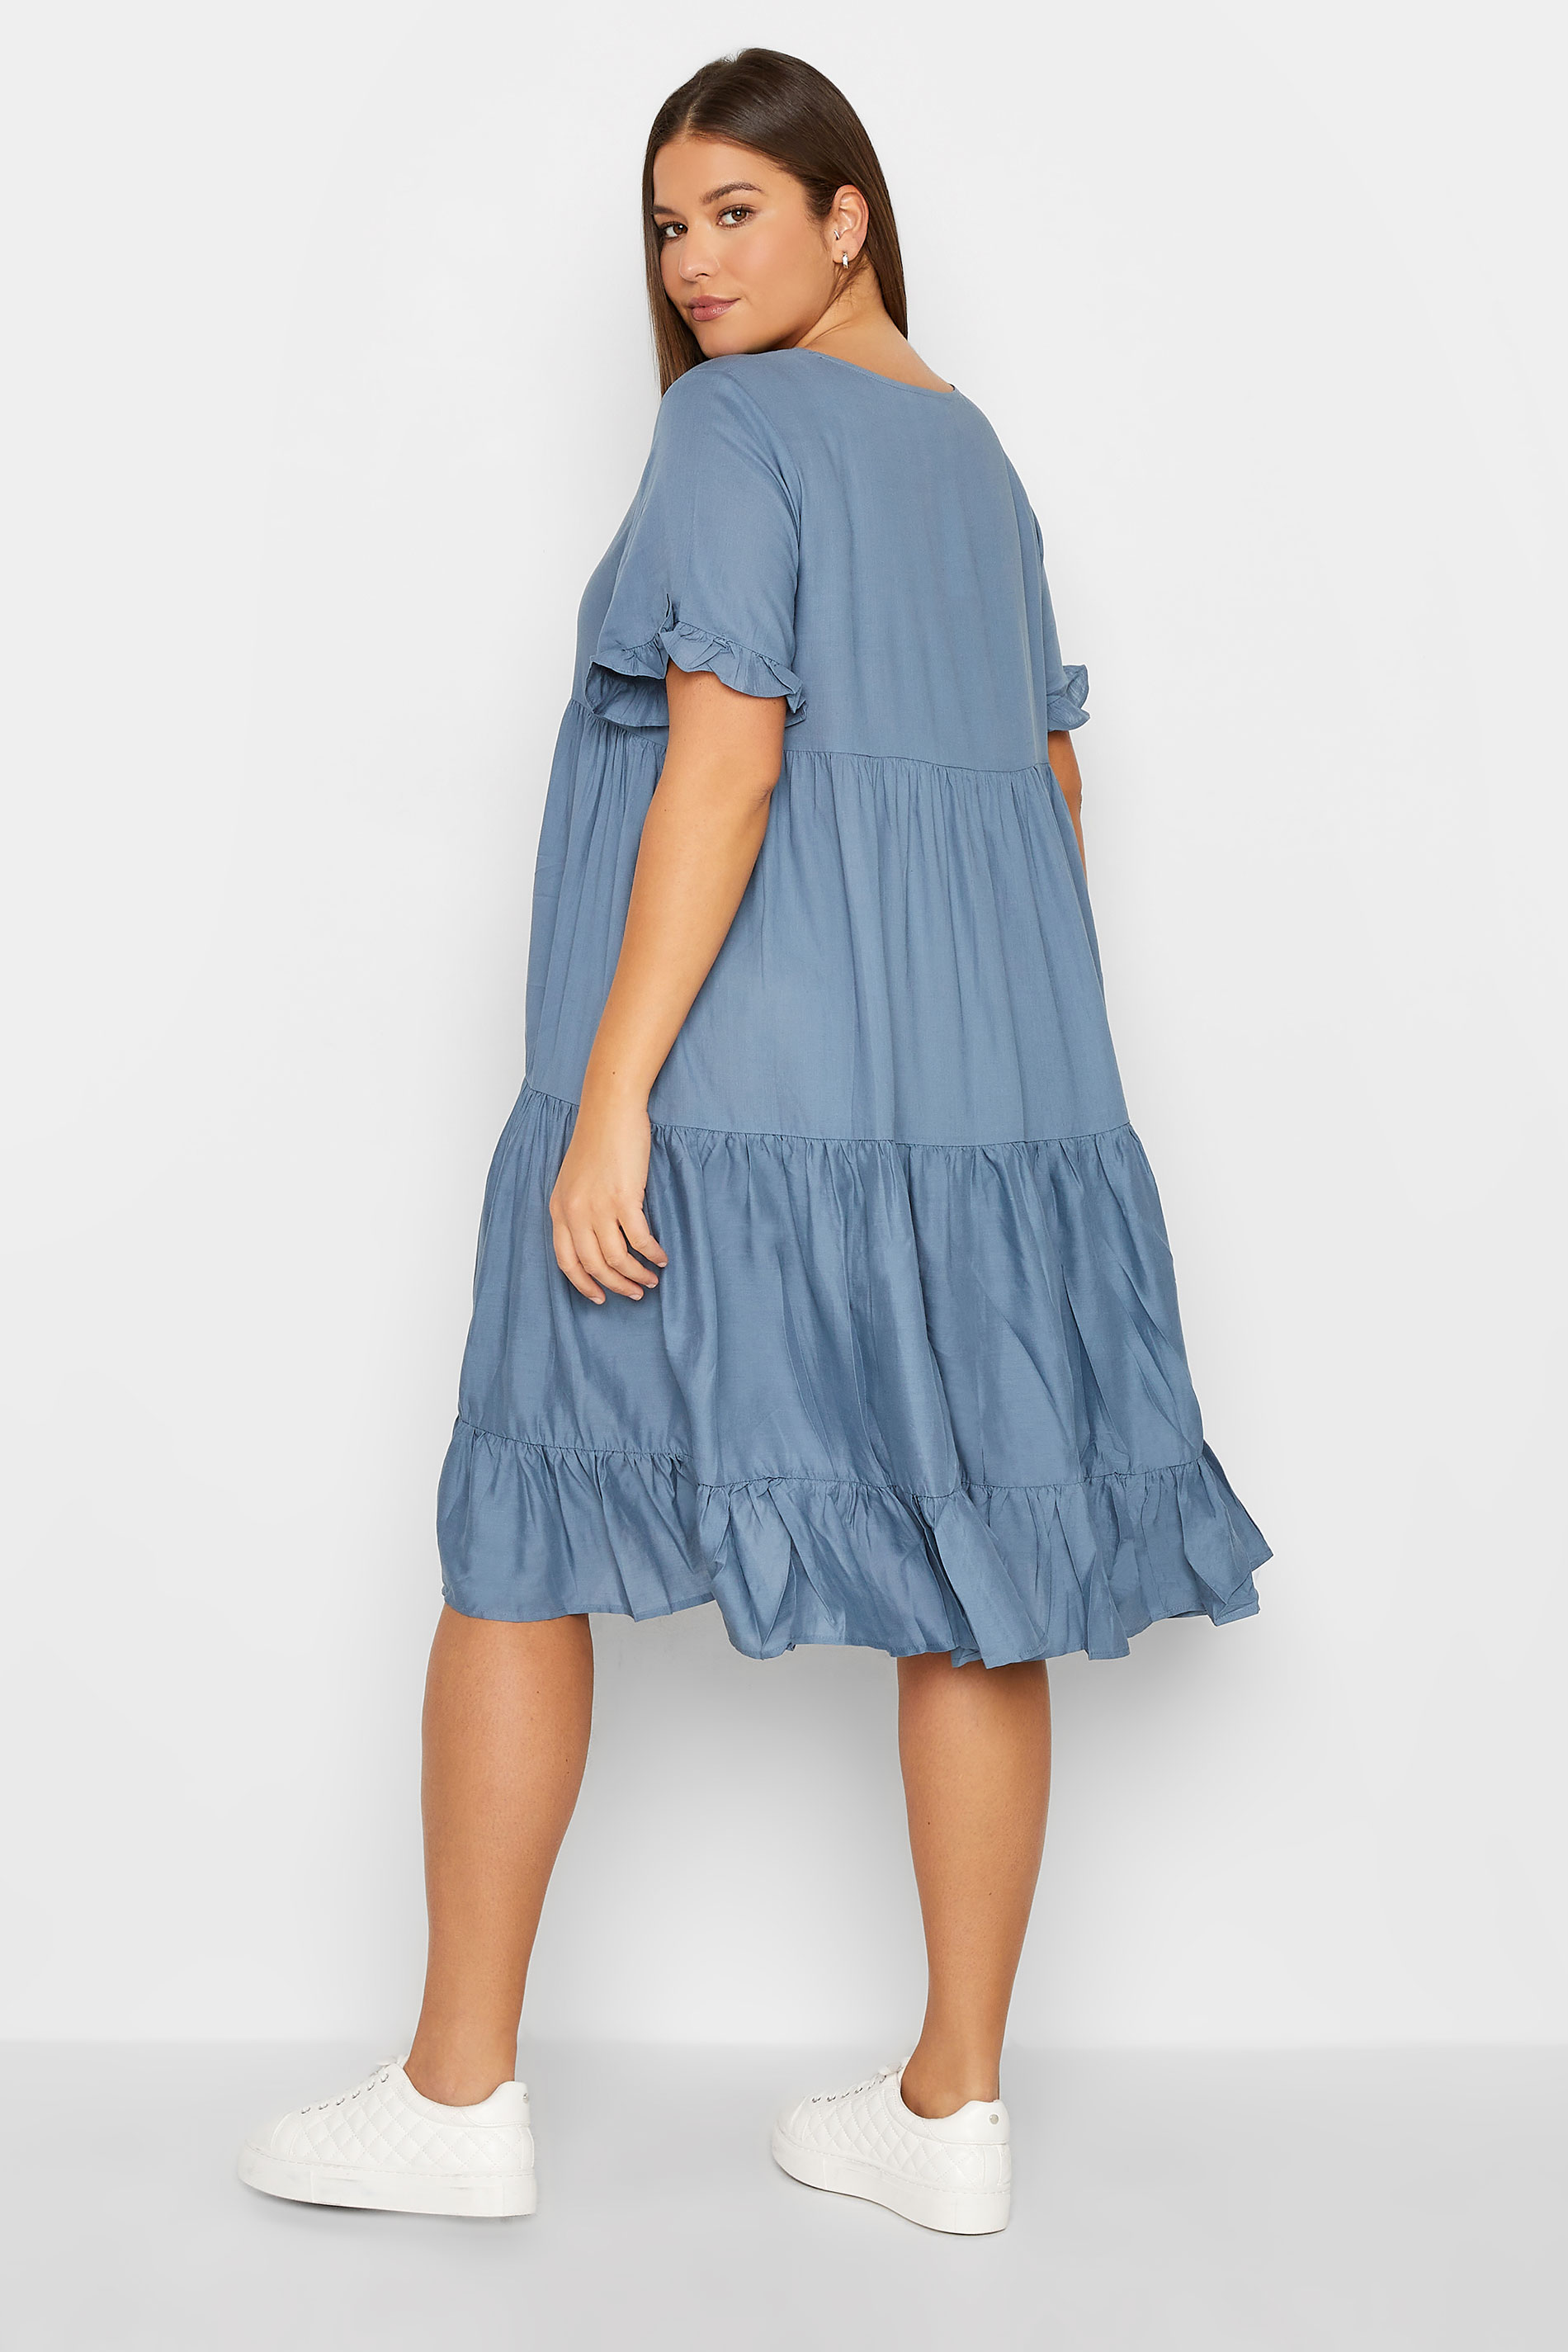 Tall Women's LTS Maternity Blue Tiered Linen Look Smock Dress | Long Tall Sally 3